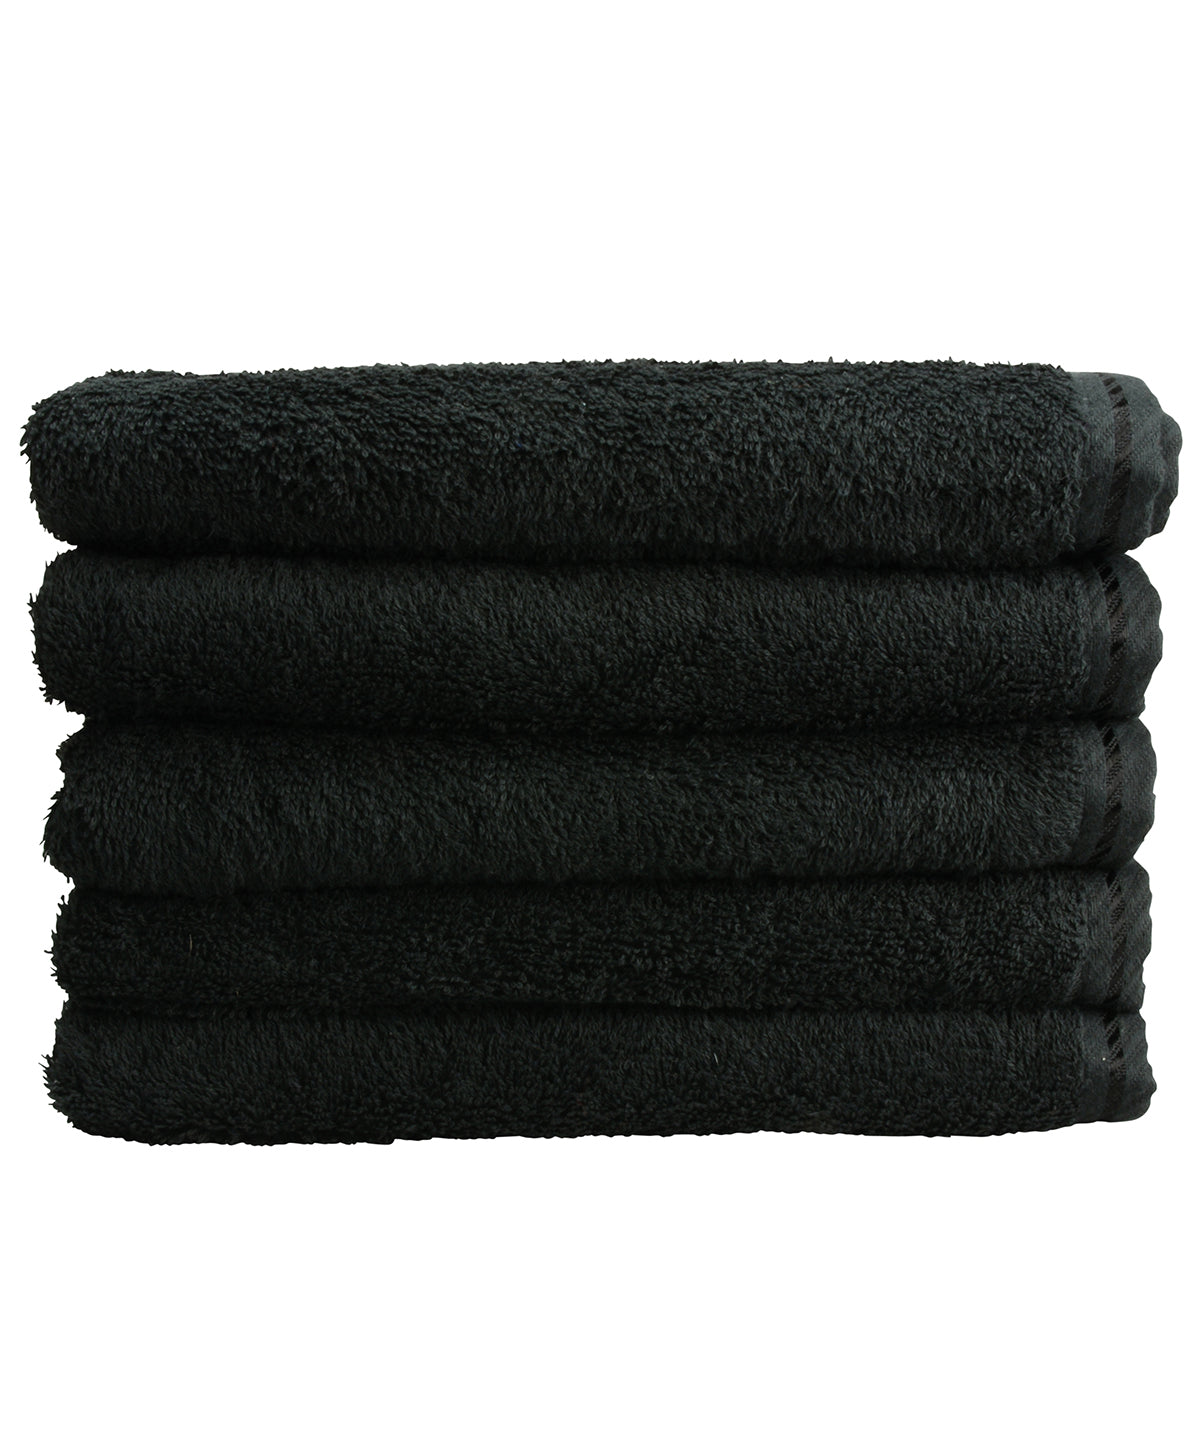 Personalised Towels - Black A&R Towels ARTG® Hand towel